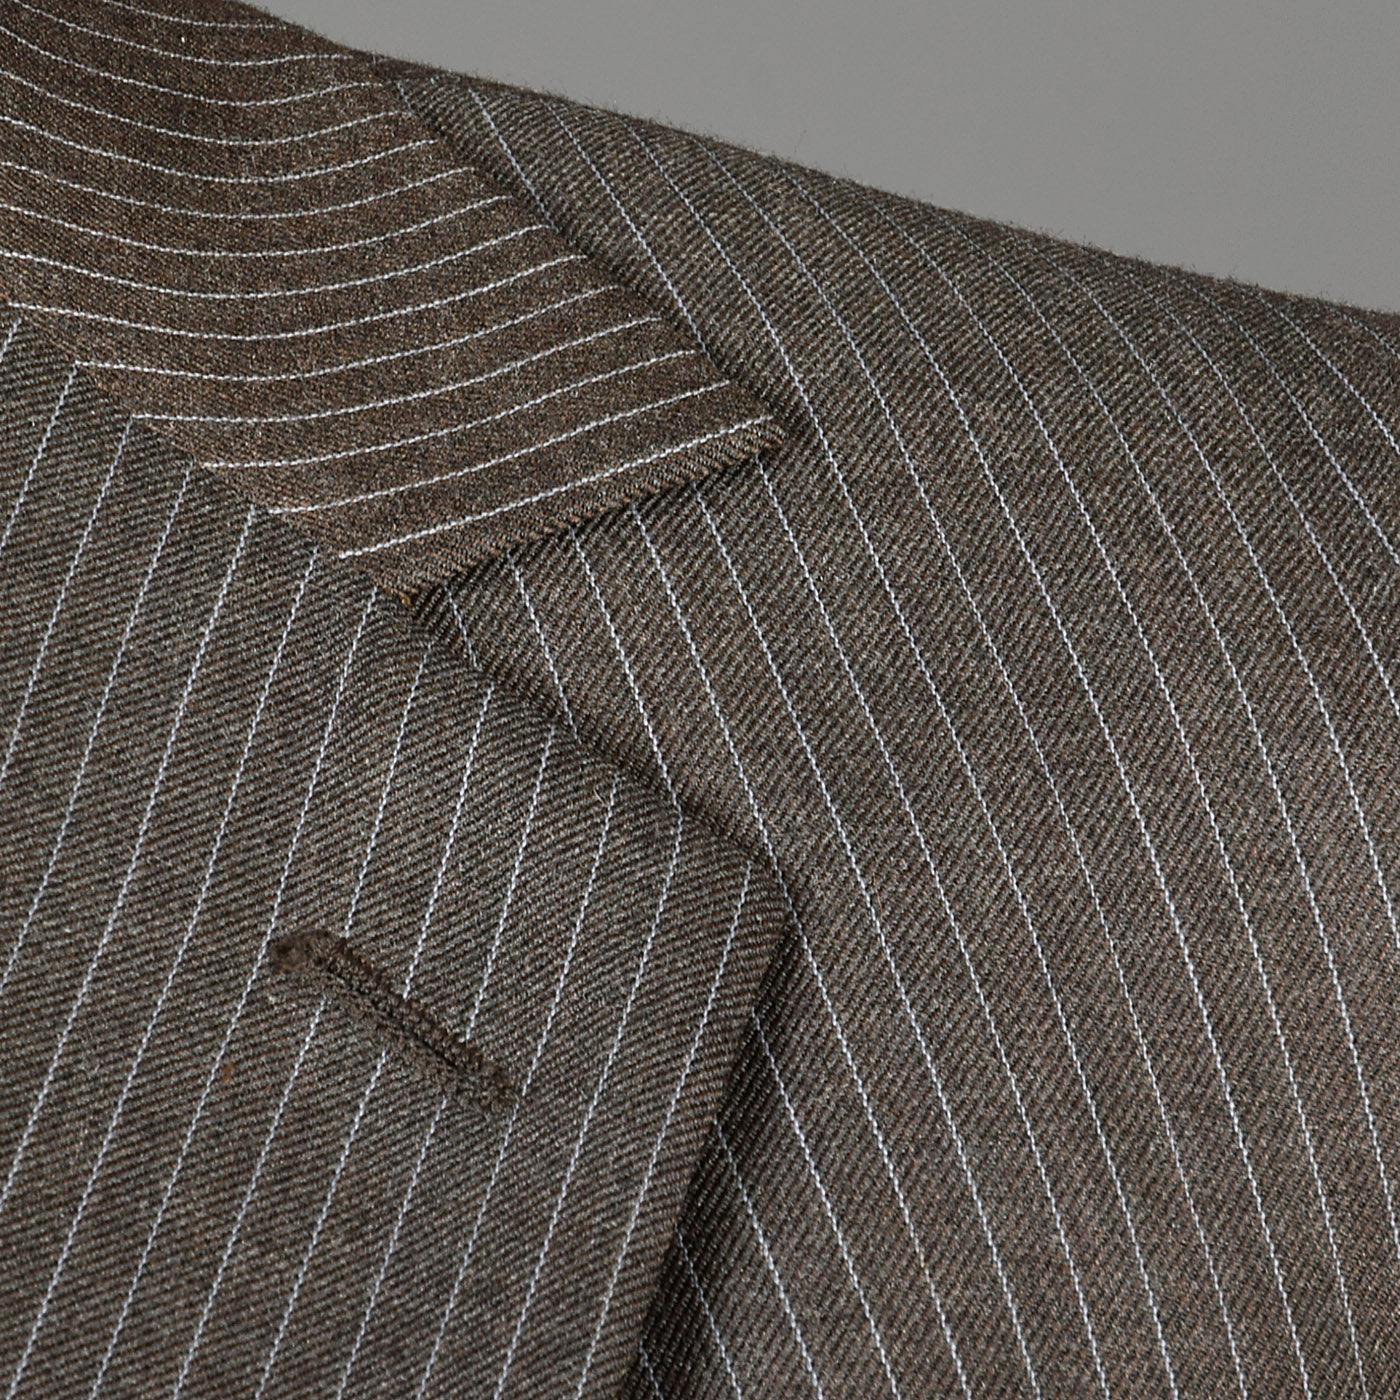 1970s Mens Three Piece Suit in Brown Pinstripe